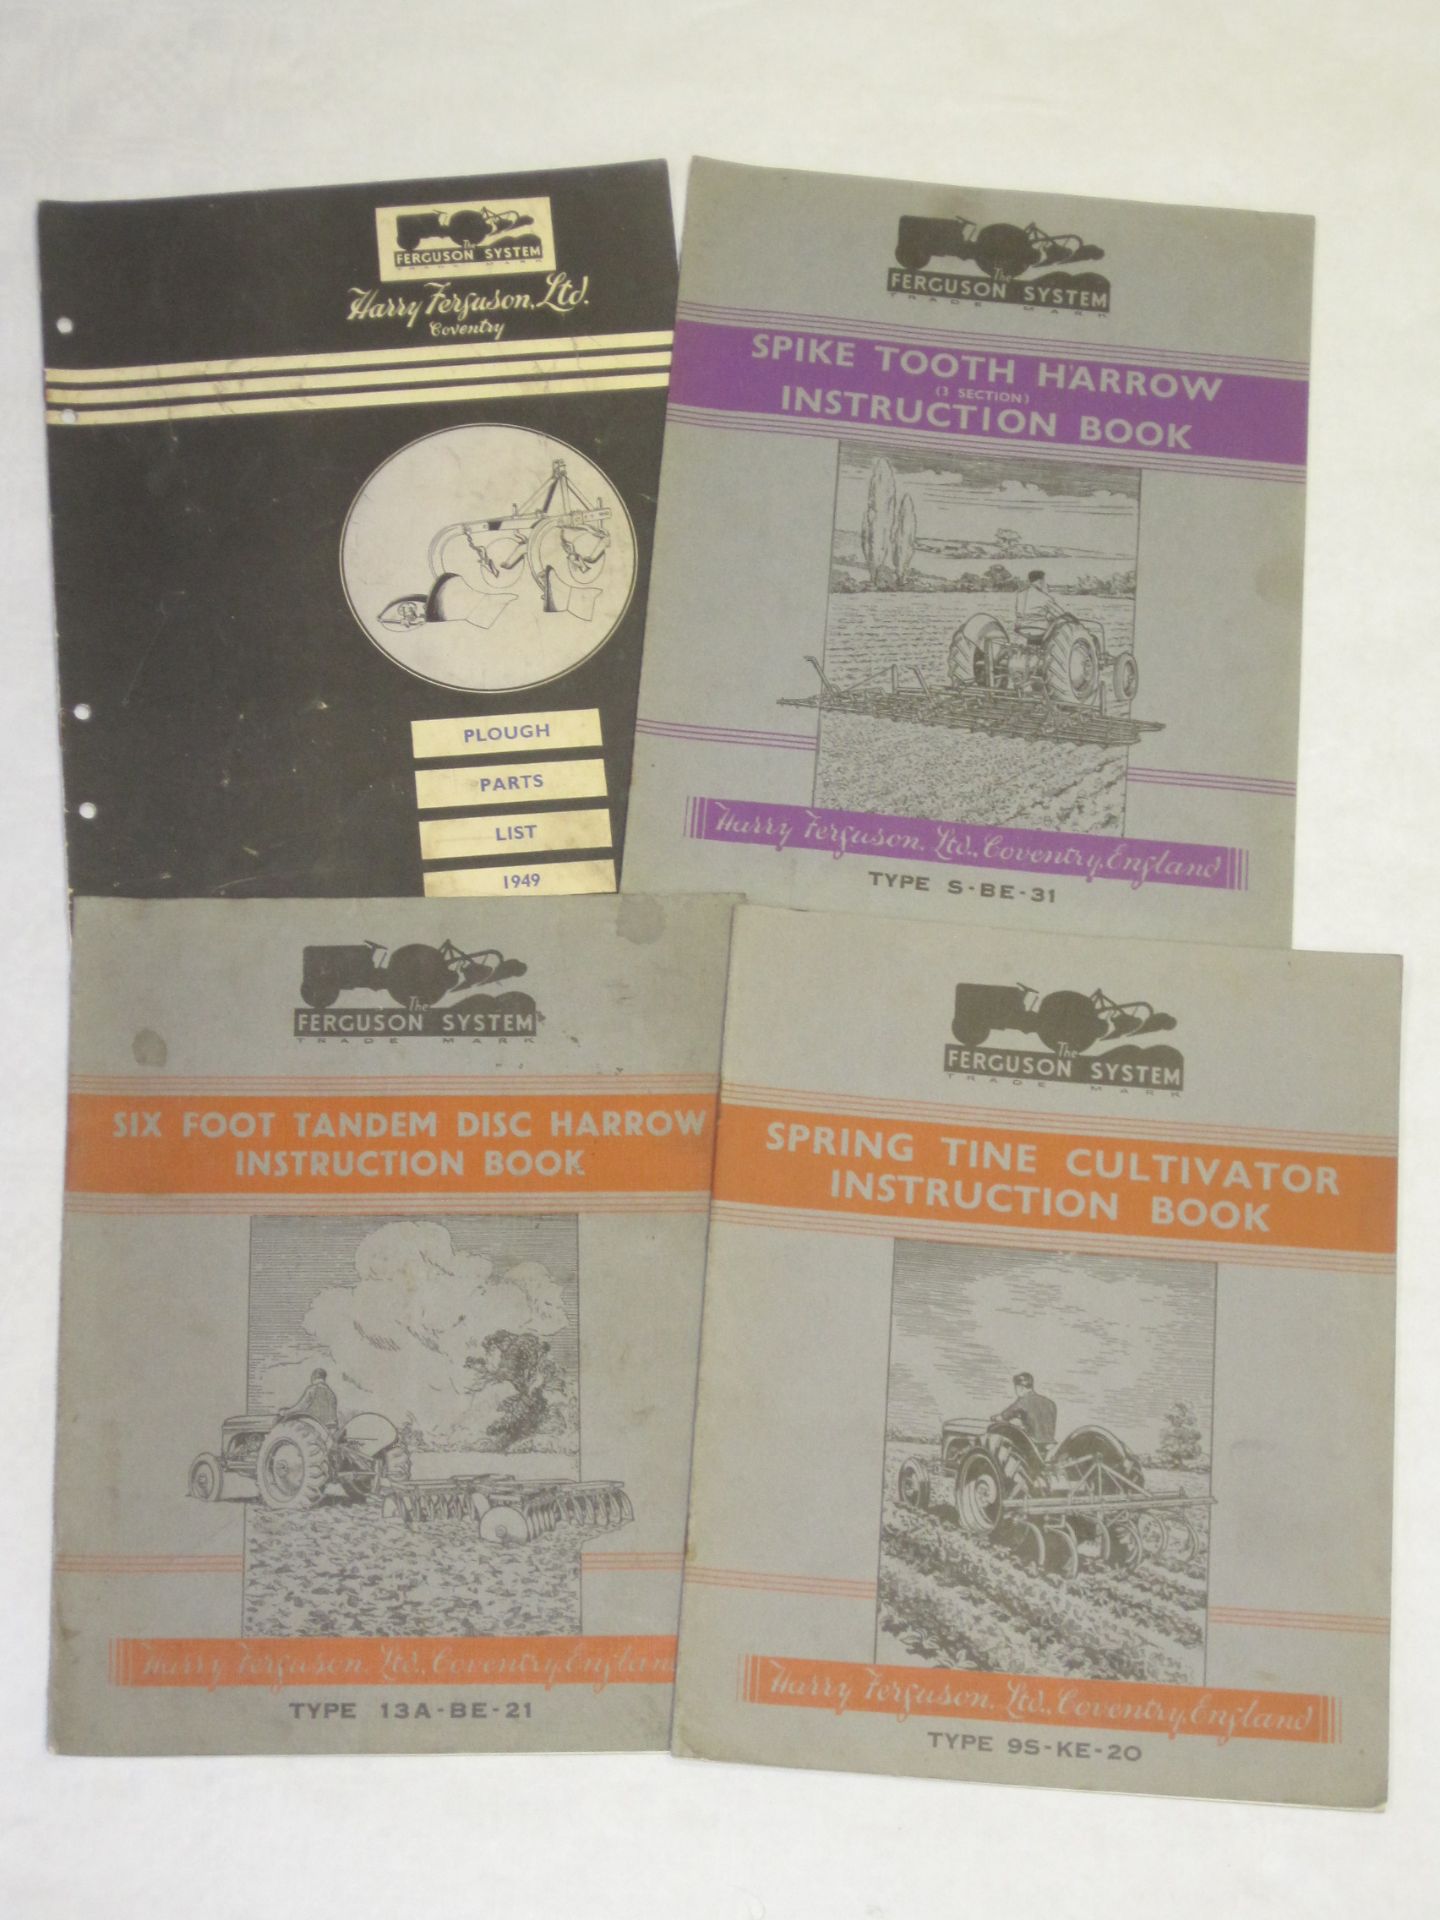 Ferguson System A4 Instruction Books; spiketooth harrow, springtine cultivator, tandem disc harrow